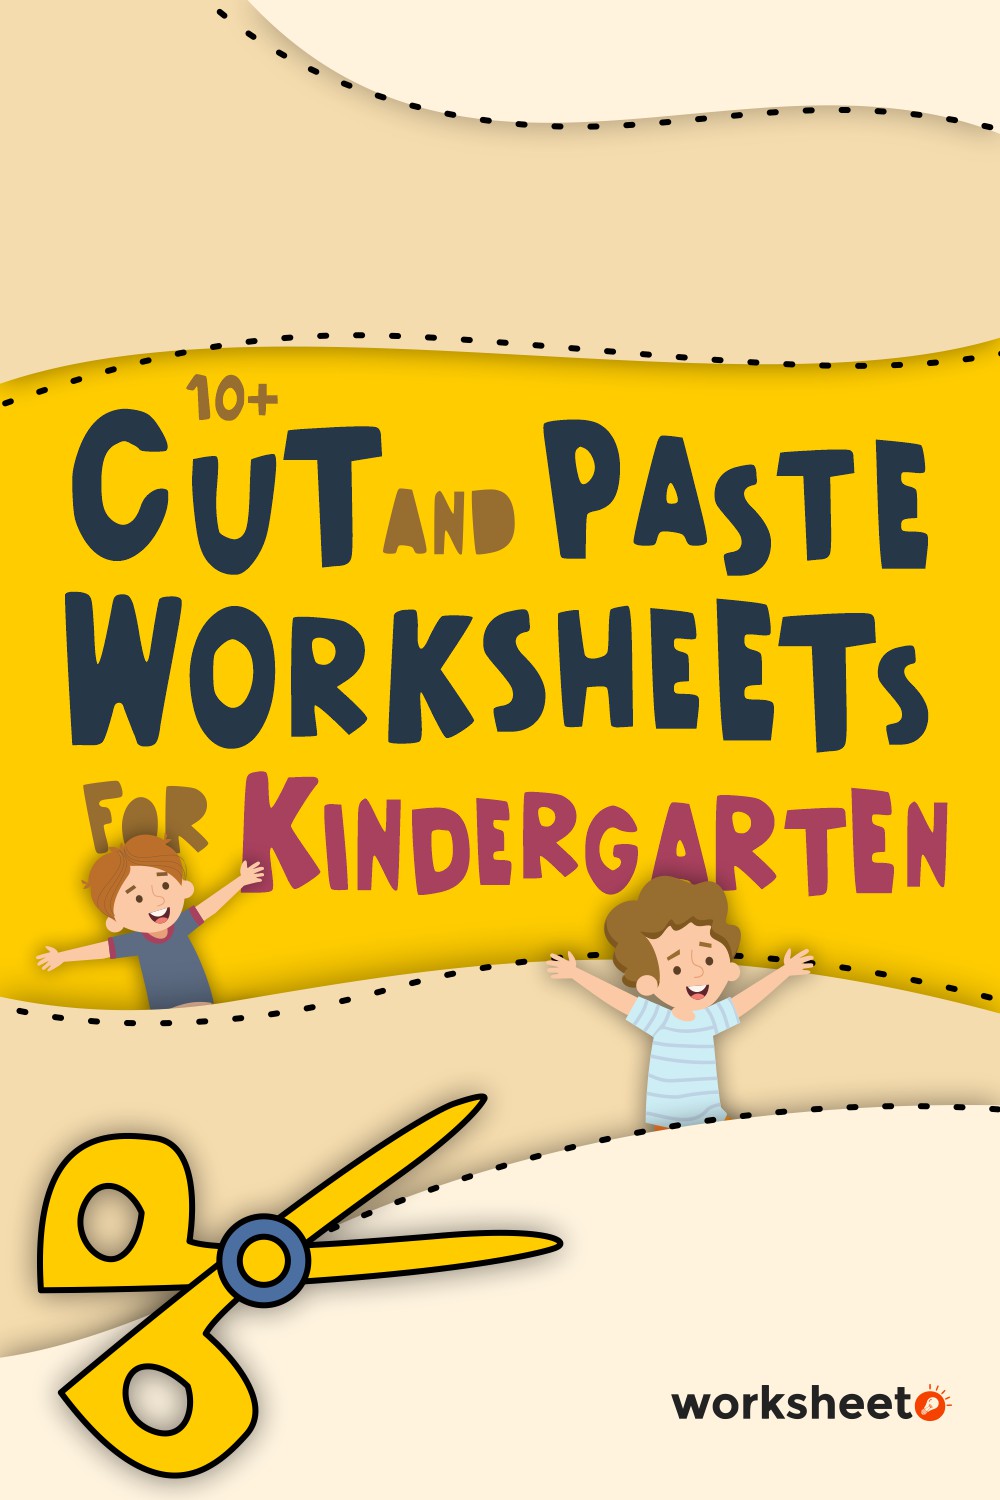 13 Images of Cut And Paste Worksheets For Kindergarten